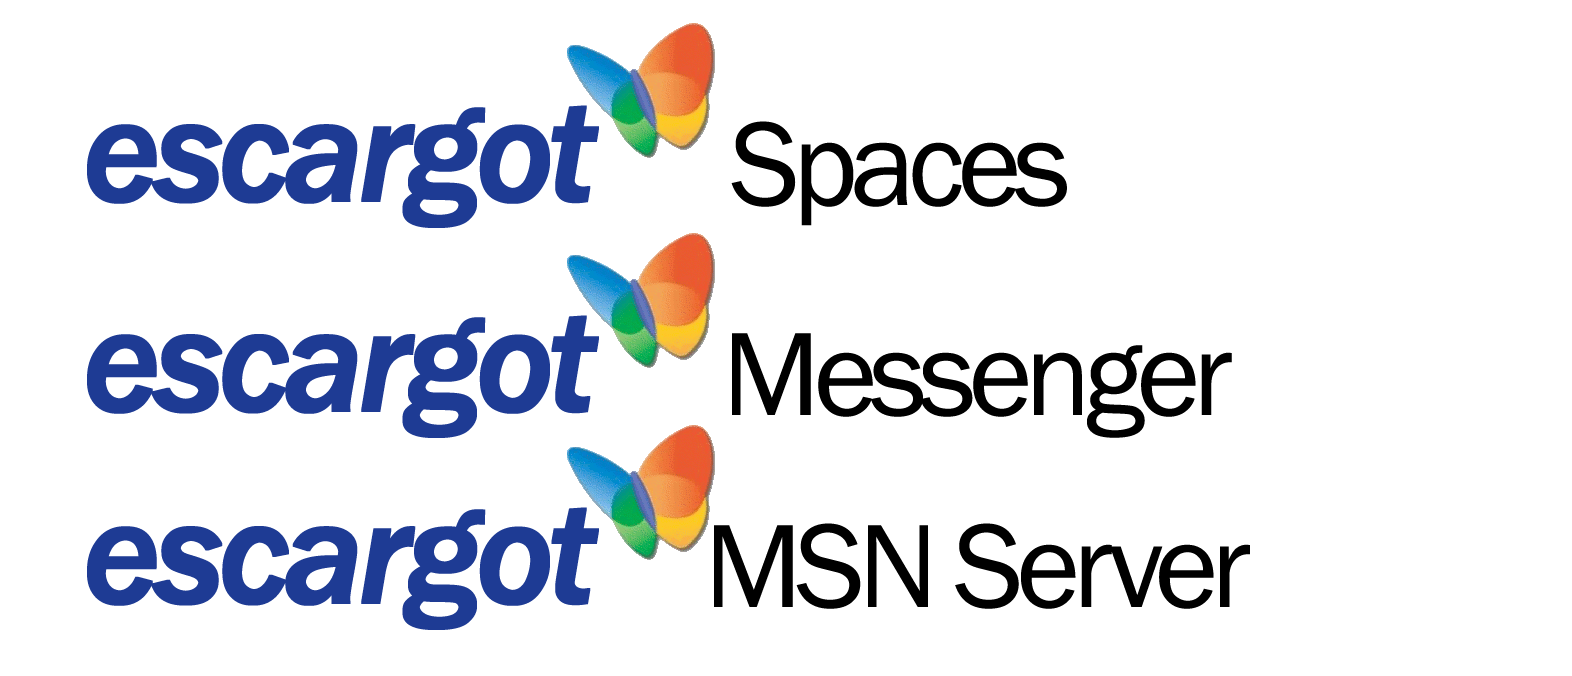 MSN Spaces Logo - If anyone needs this Escargot logo - Escargot MSN Server - MessengerGeek